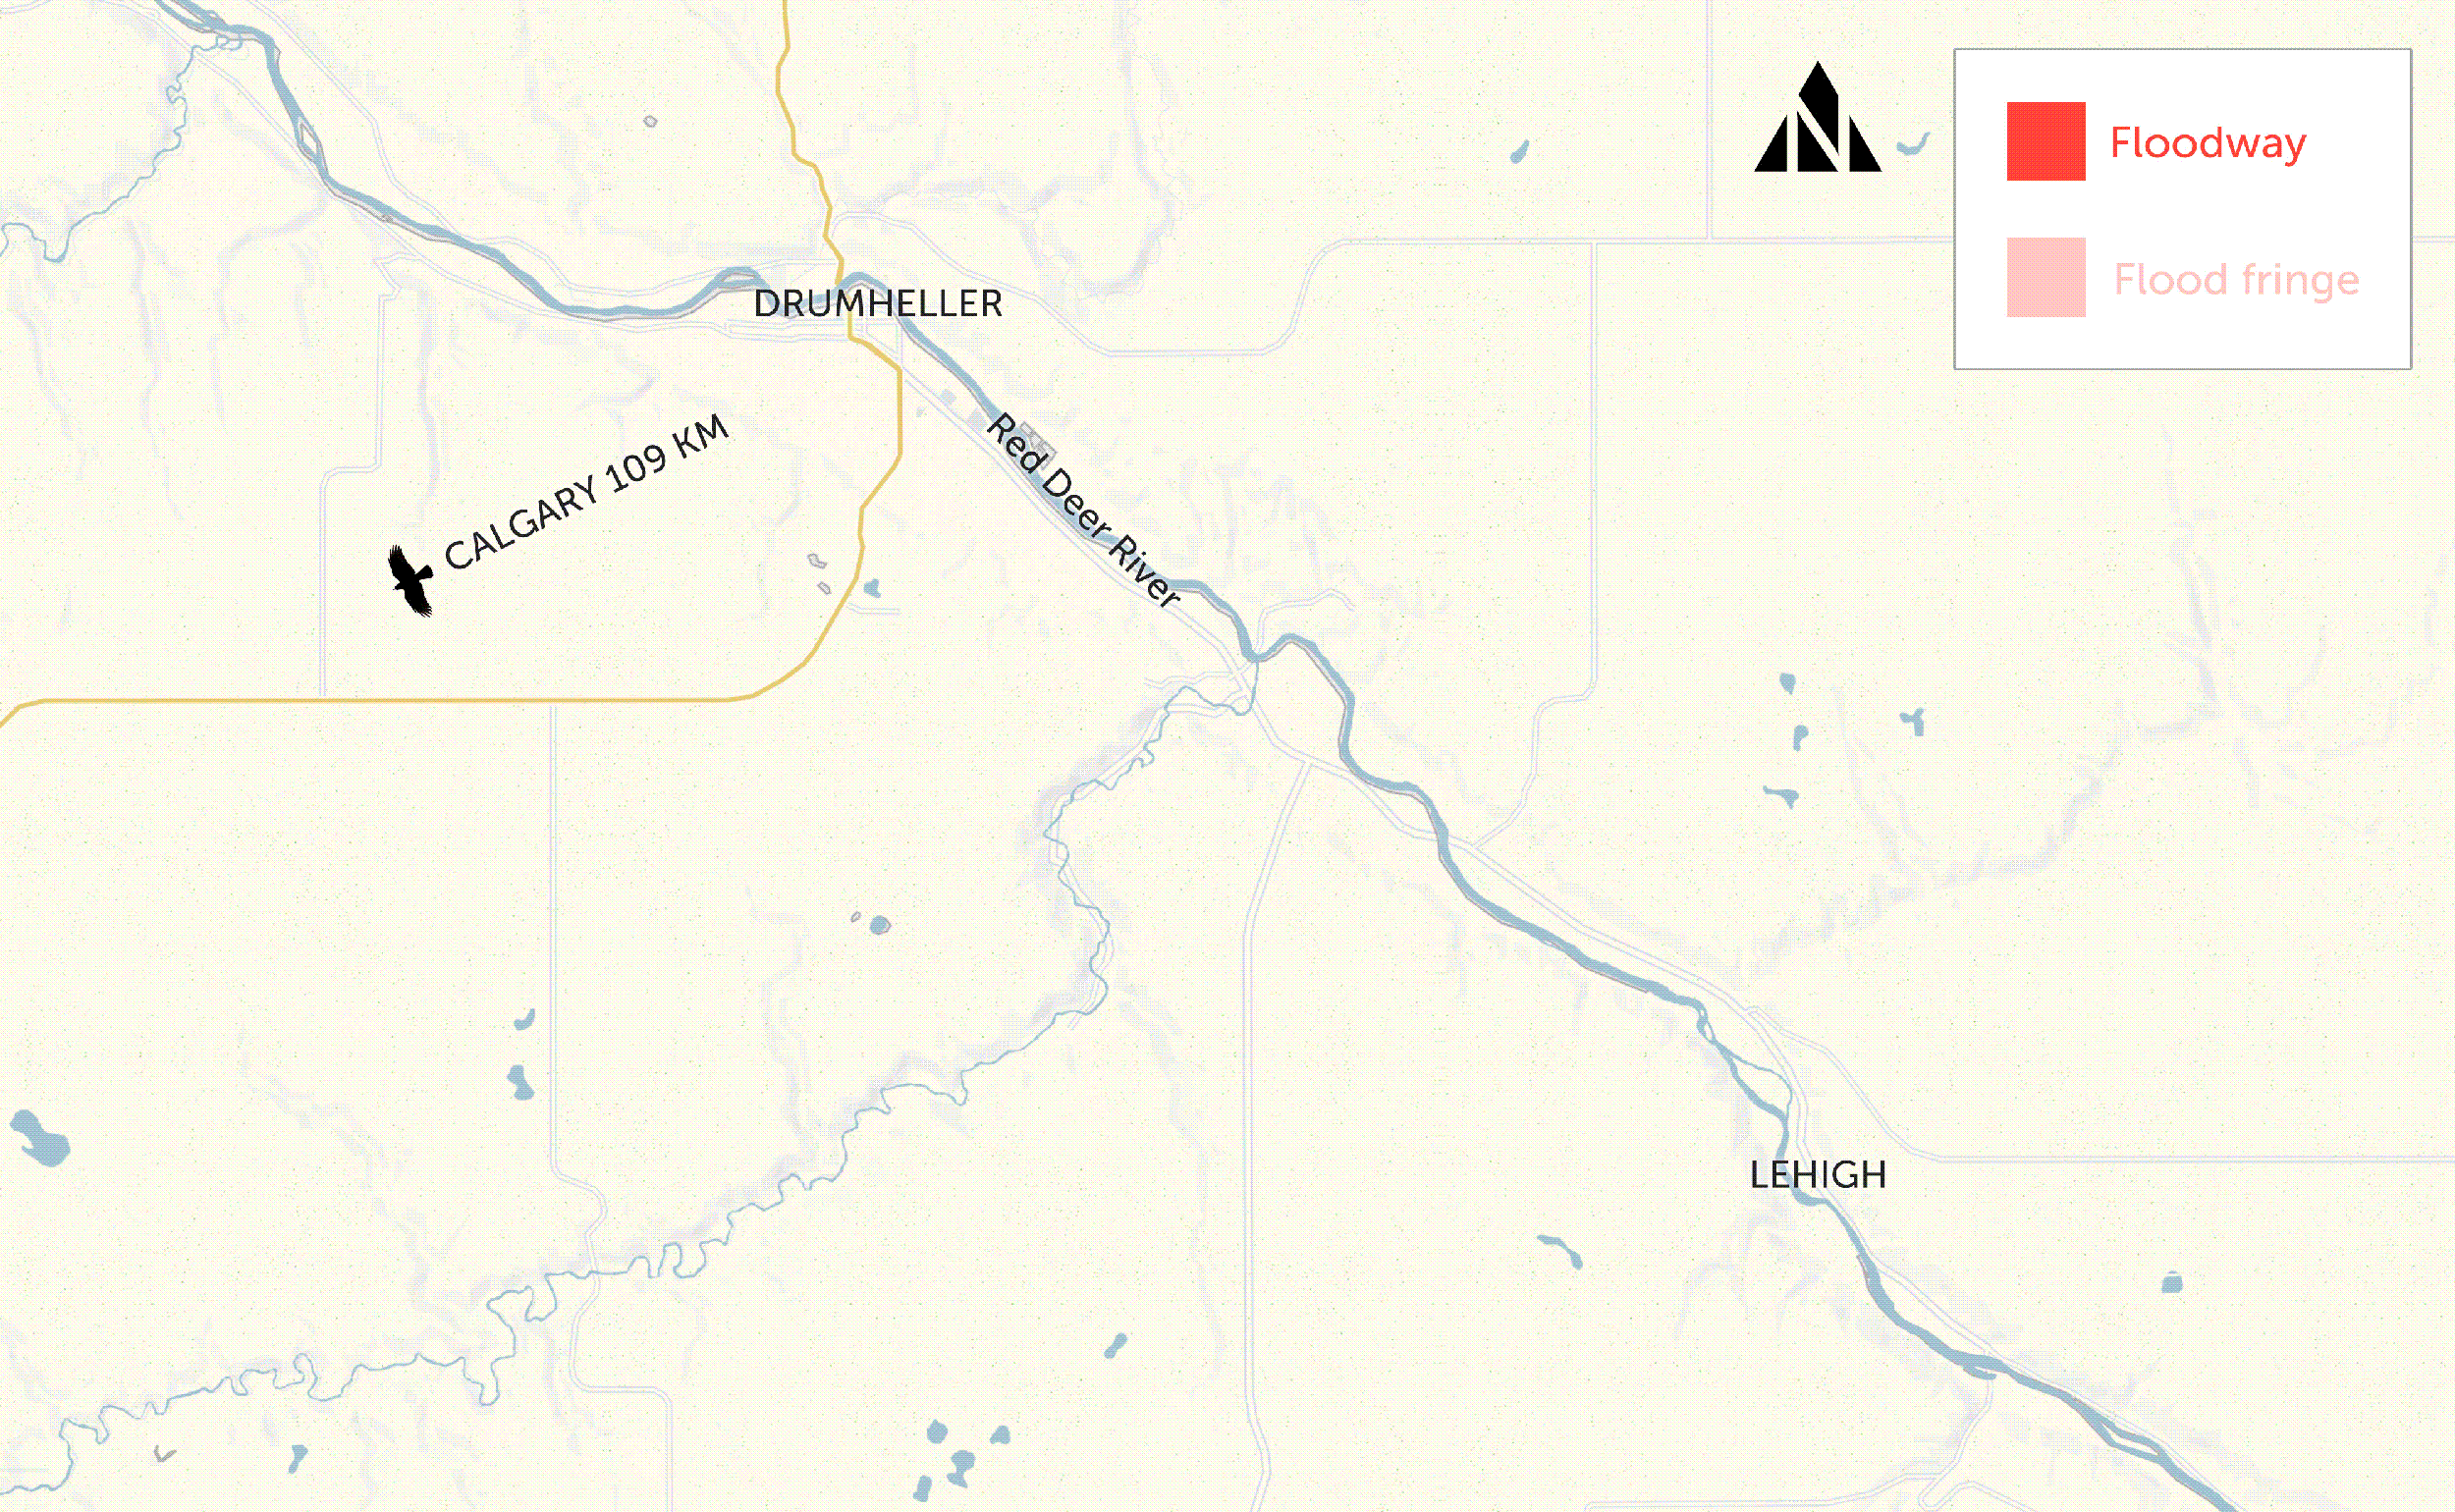 Map showing flood zones of Red Deer River and Drumheller in Alberta